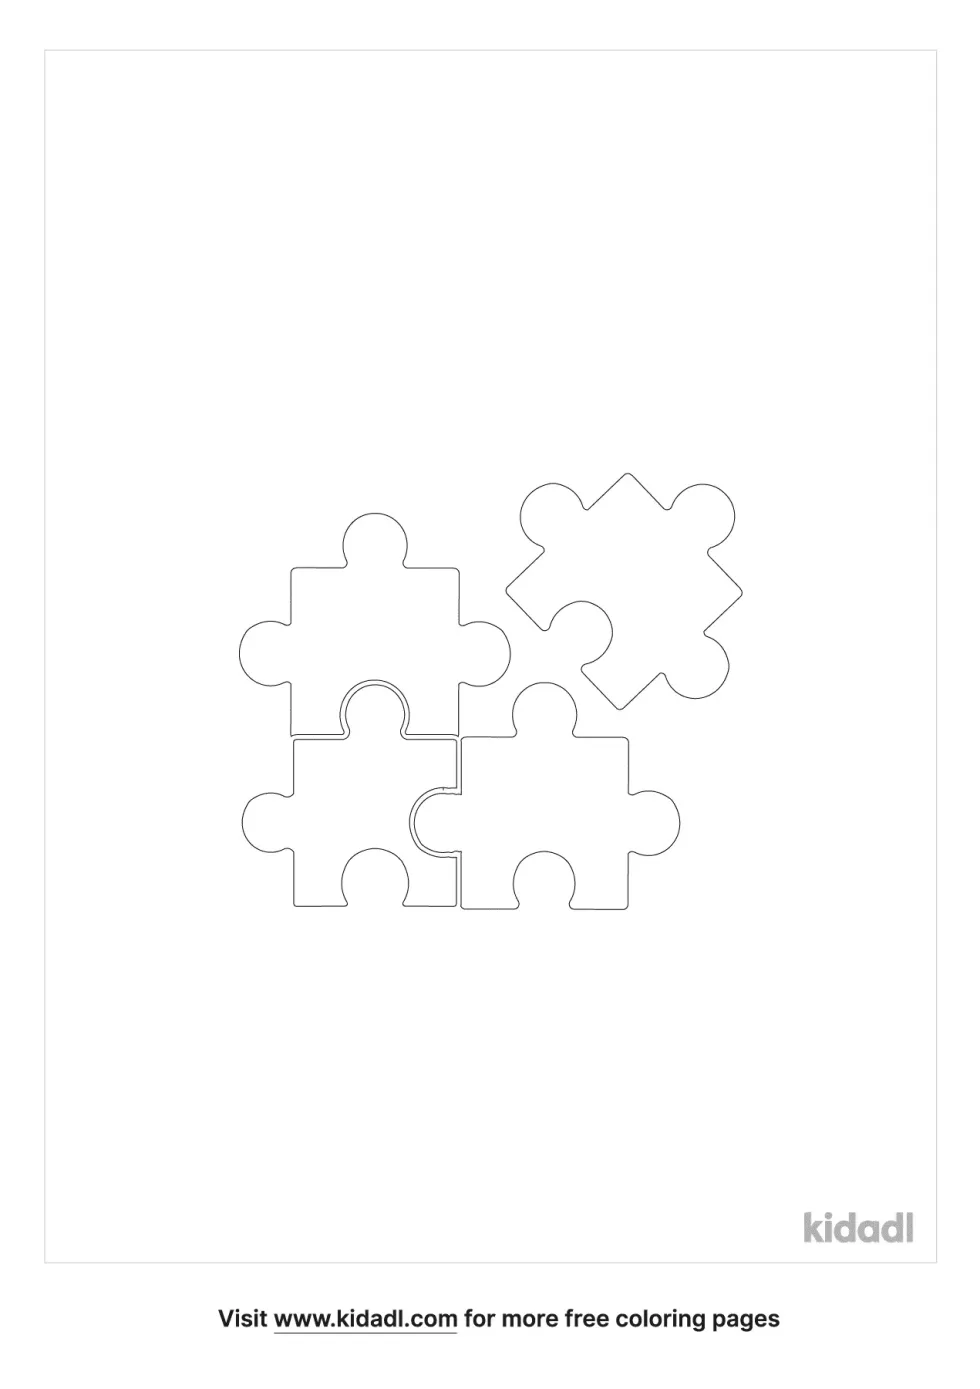 Simple Puzzle